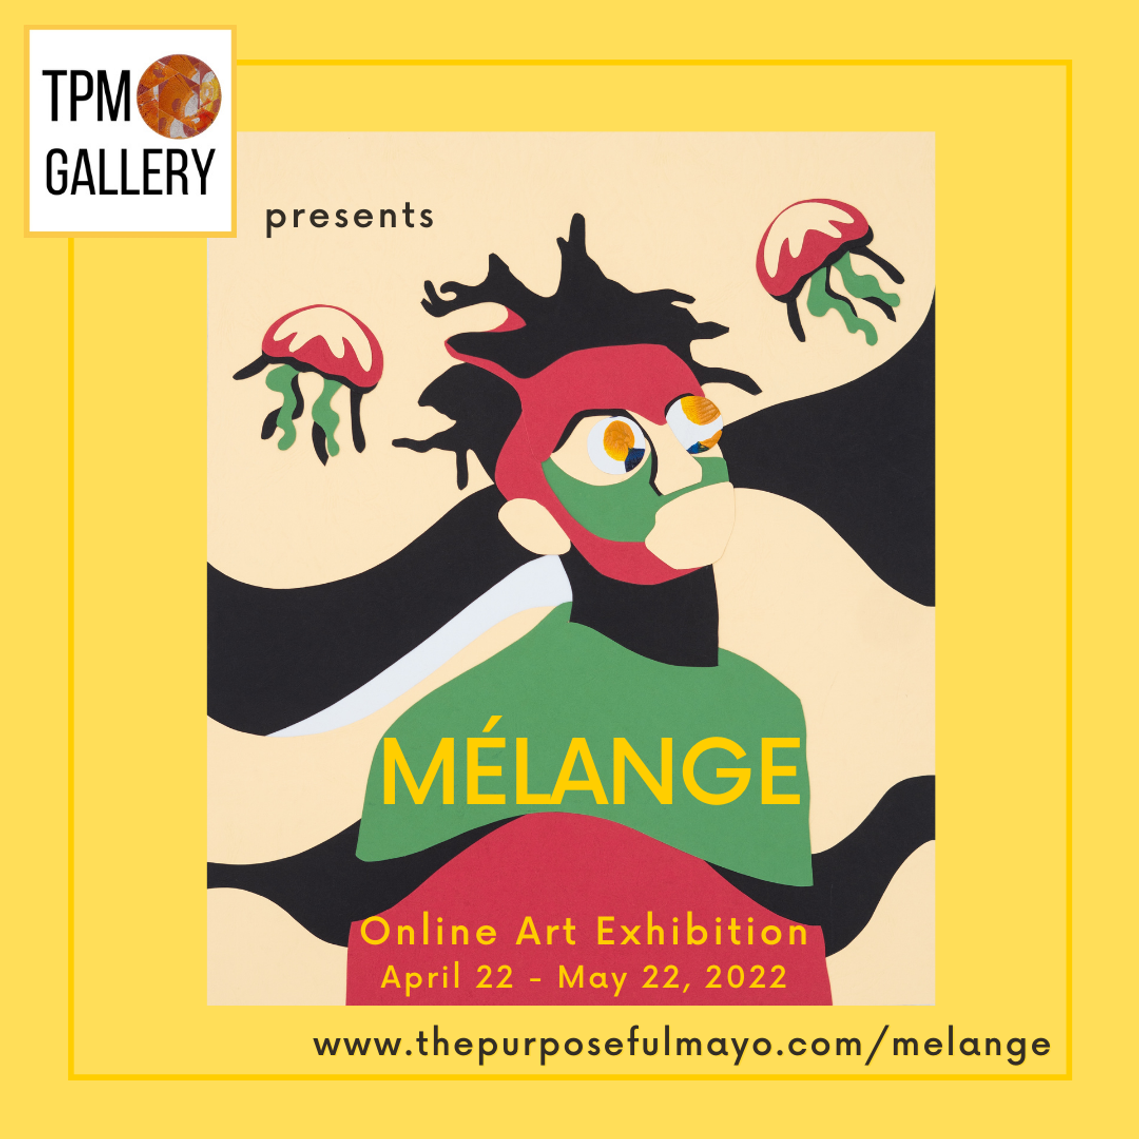 Mélange Online Group Exhibition
April 22 - May 22, 2022